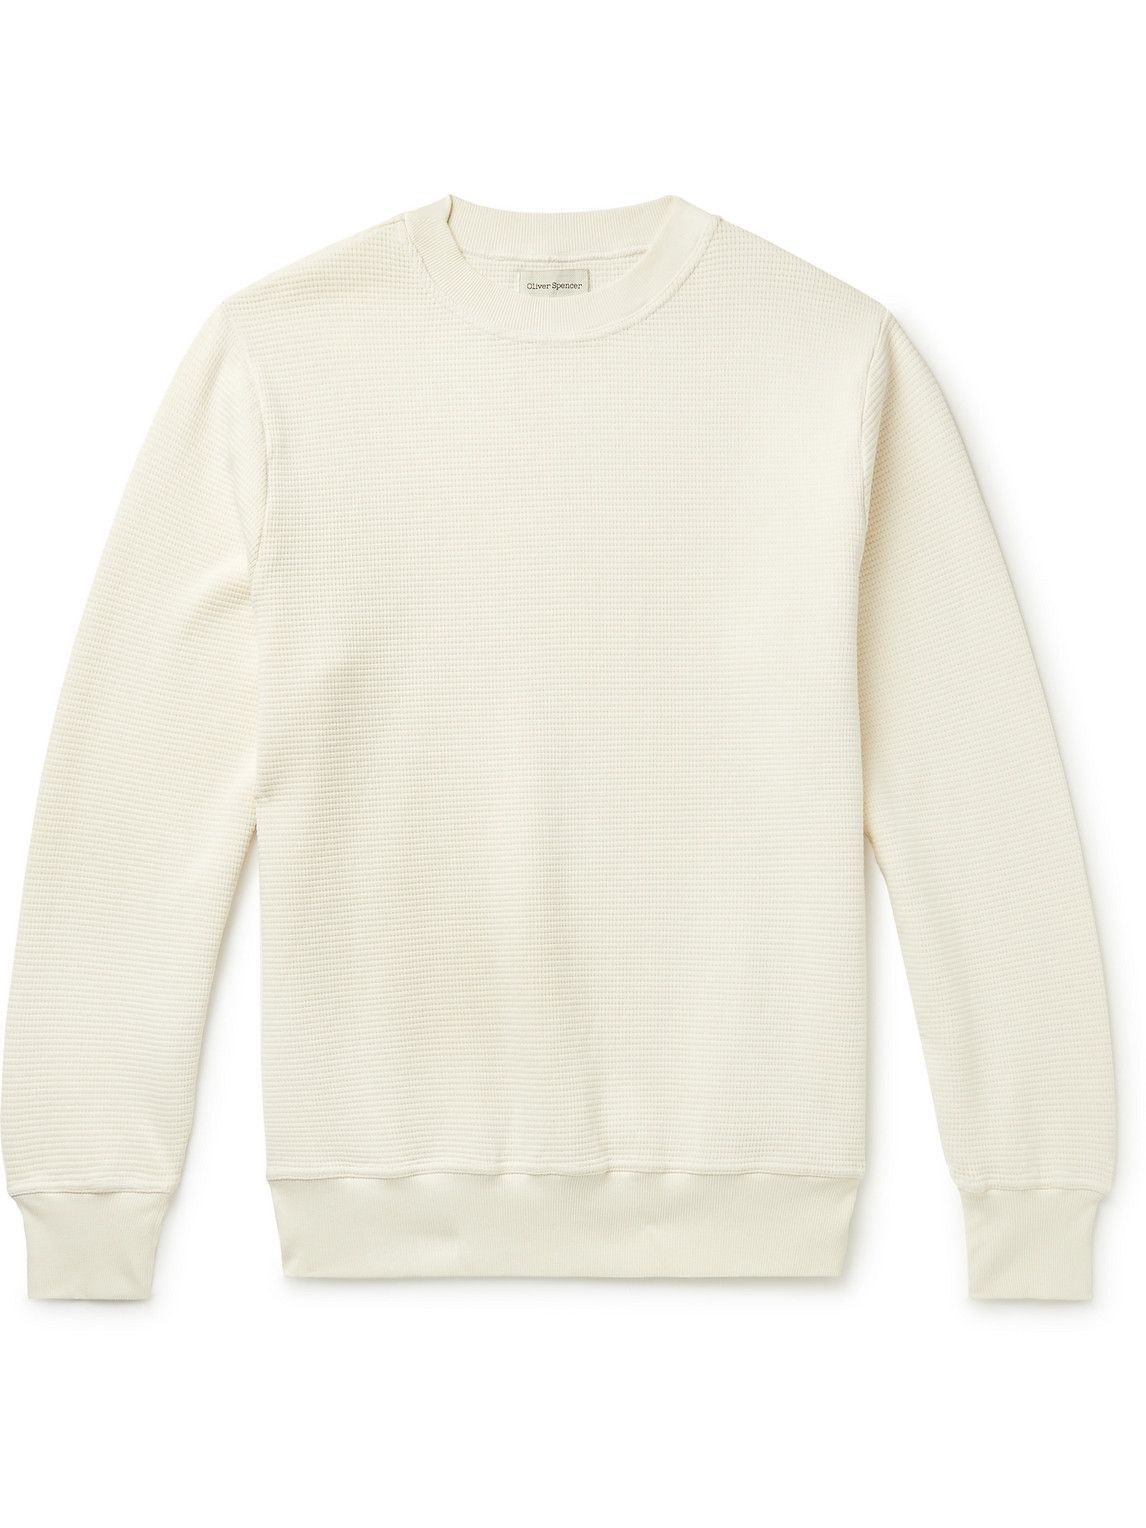 Oliver Spencer - Robin Waffle-Knit Organic Cotton Sweatshirt - Neutrals